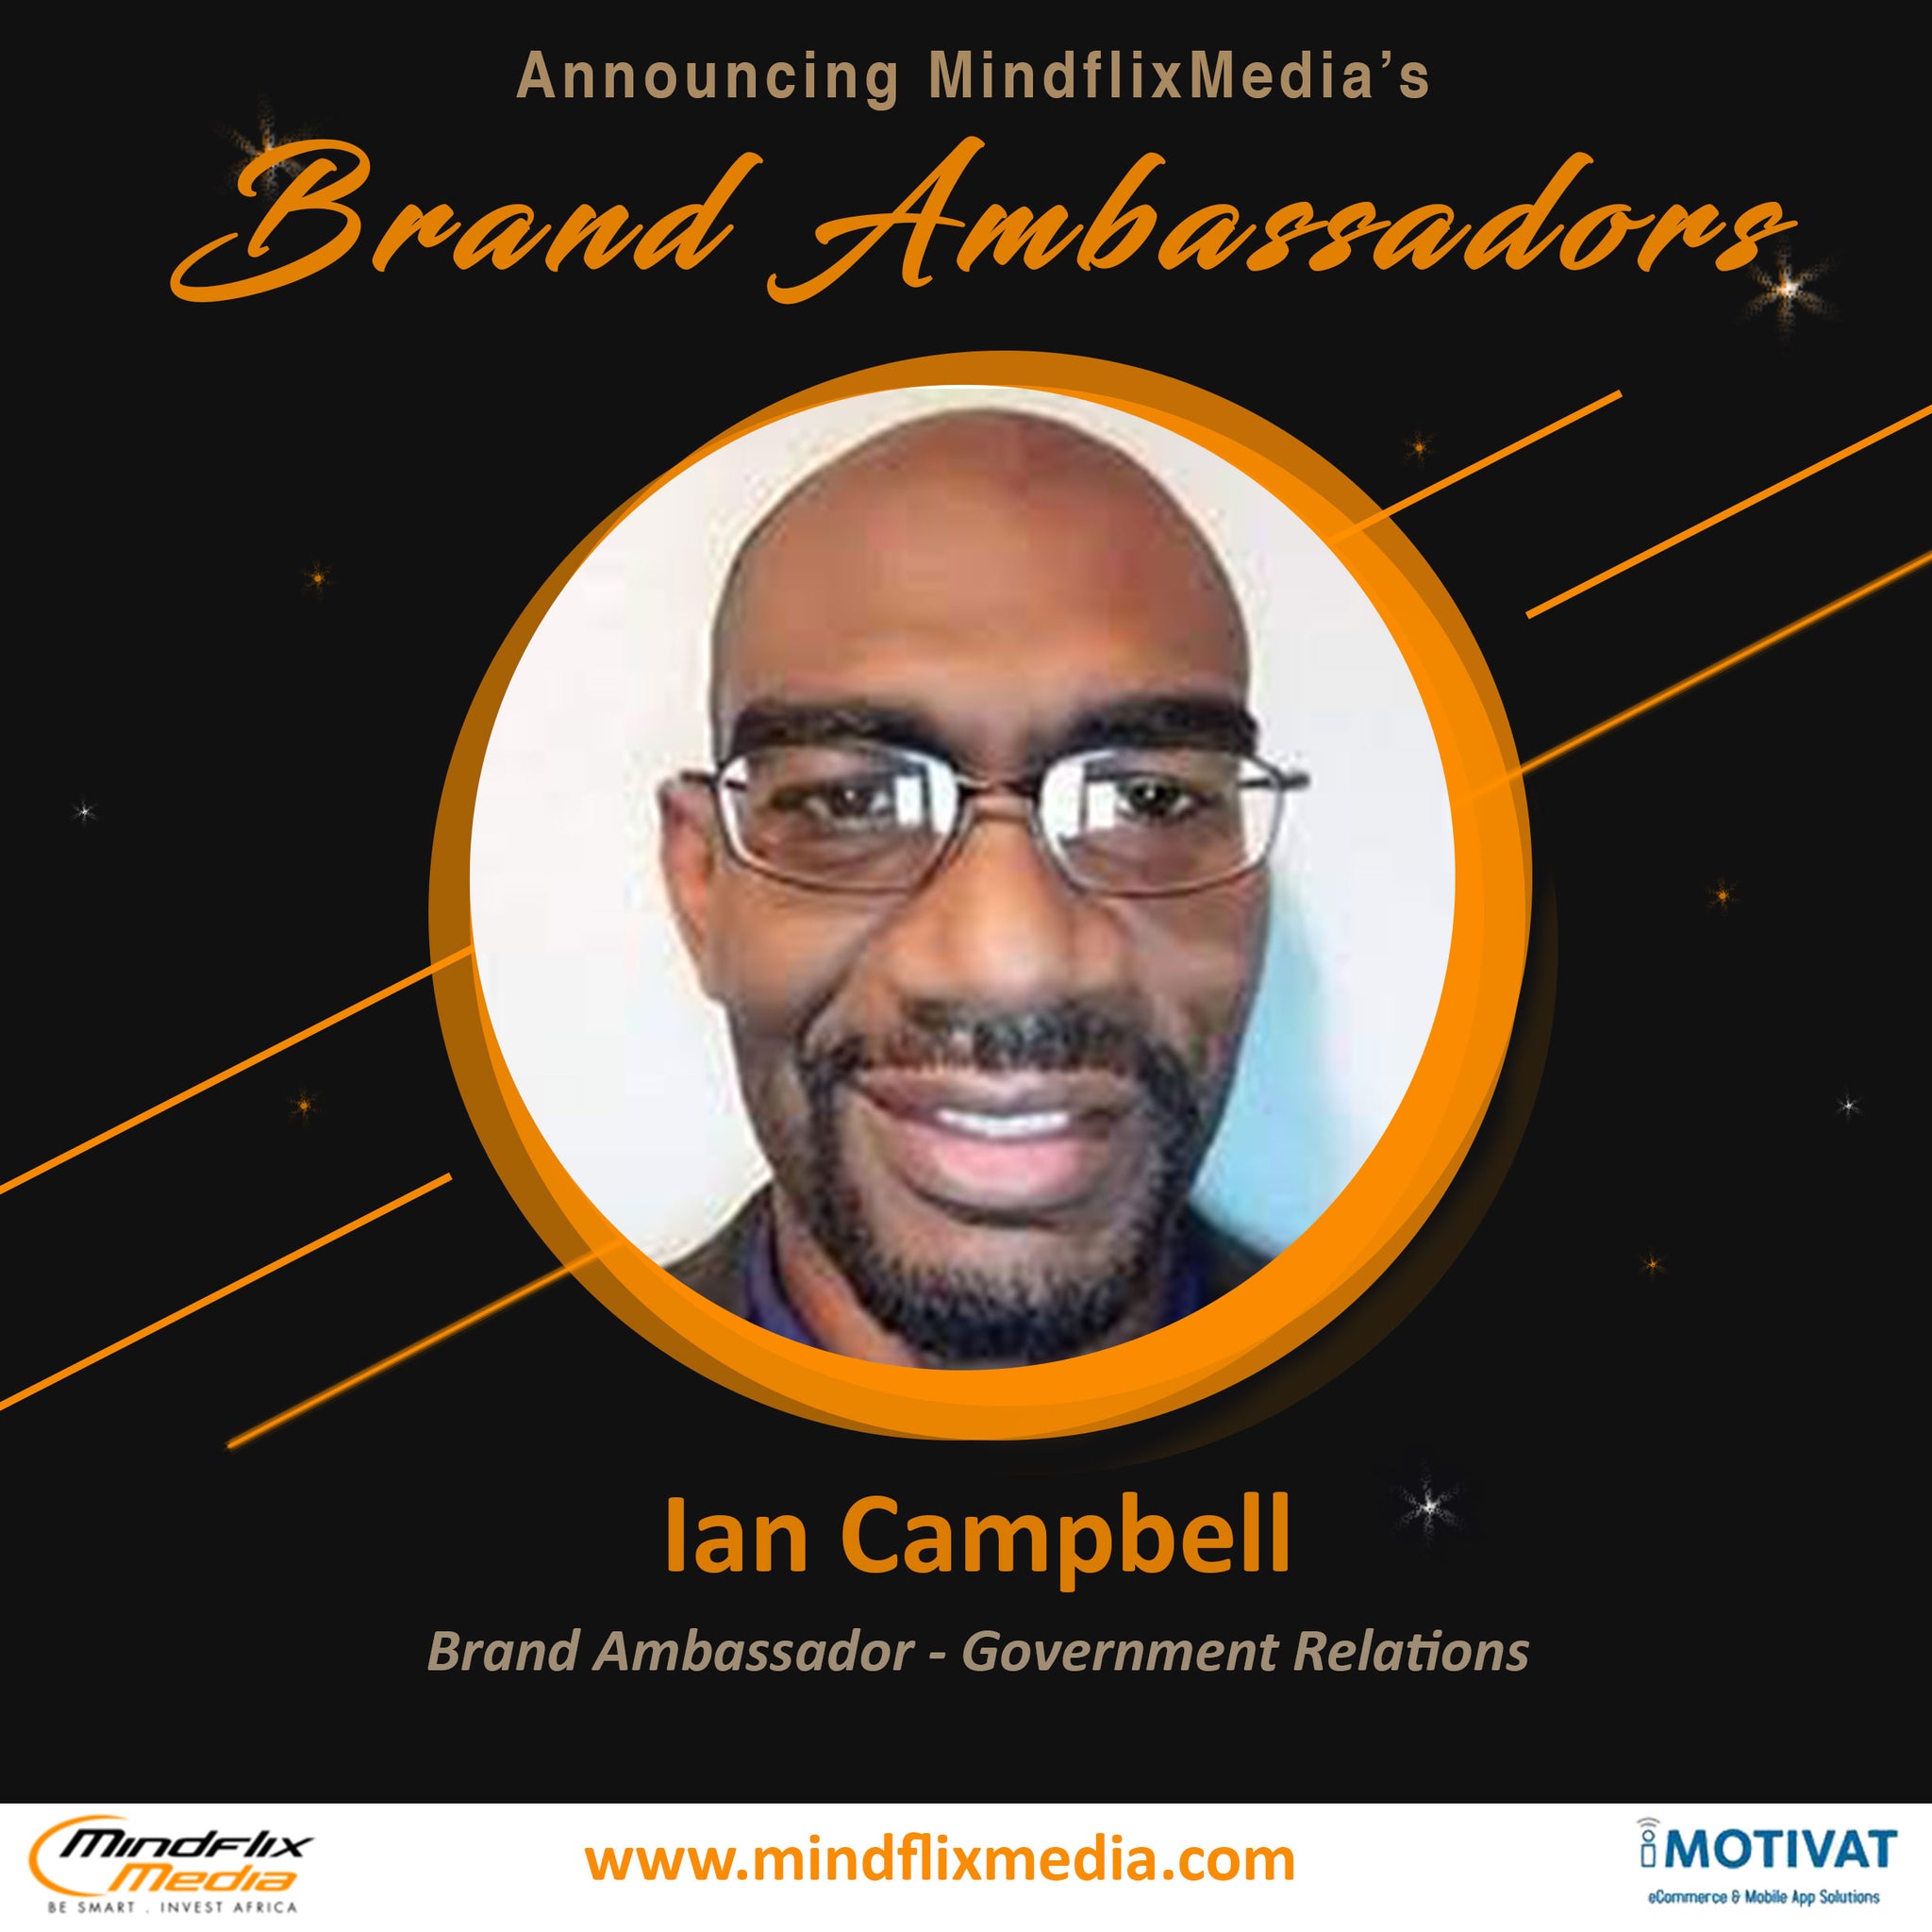 Ian Campbell - Brand Ambassador - Government Relations